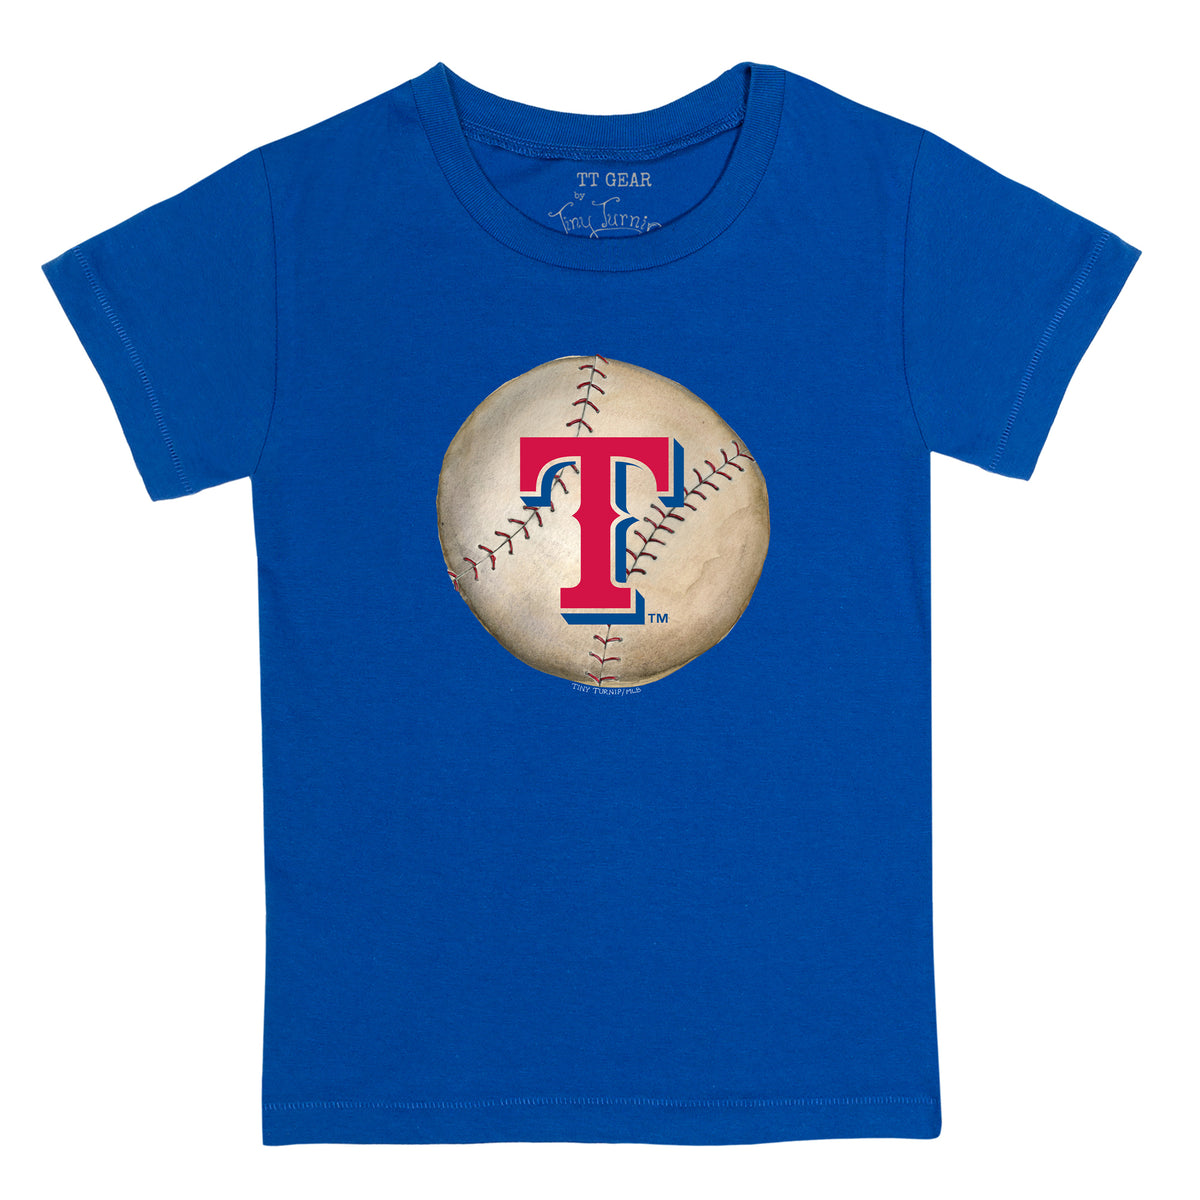 Texas Rangers Kate The Catcher Tee Shirt Youth XL (12-14) / White